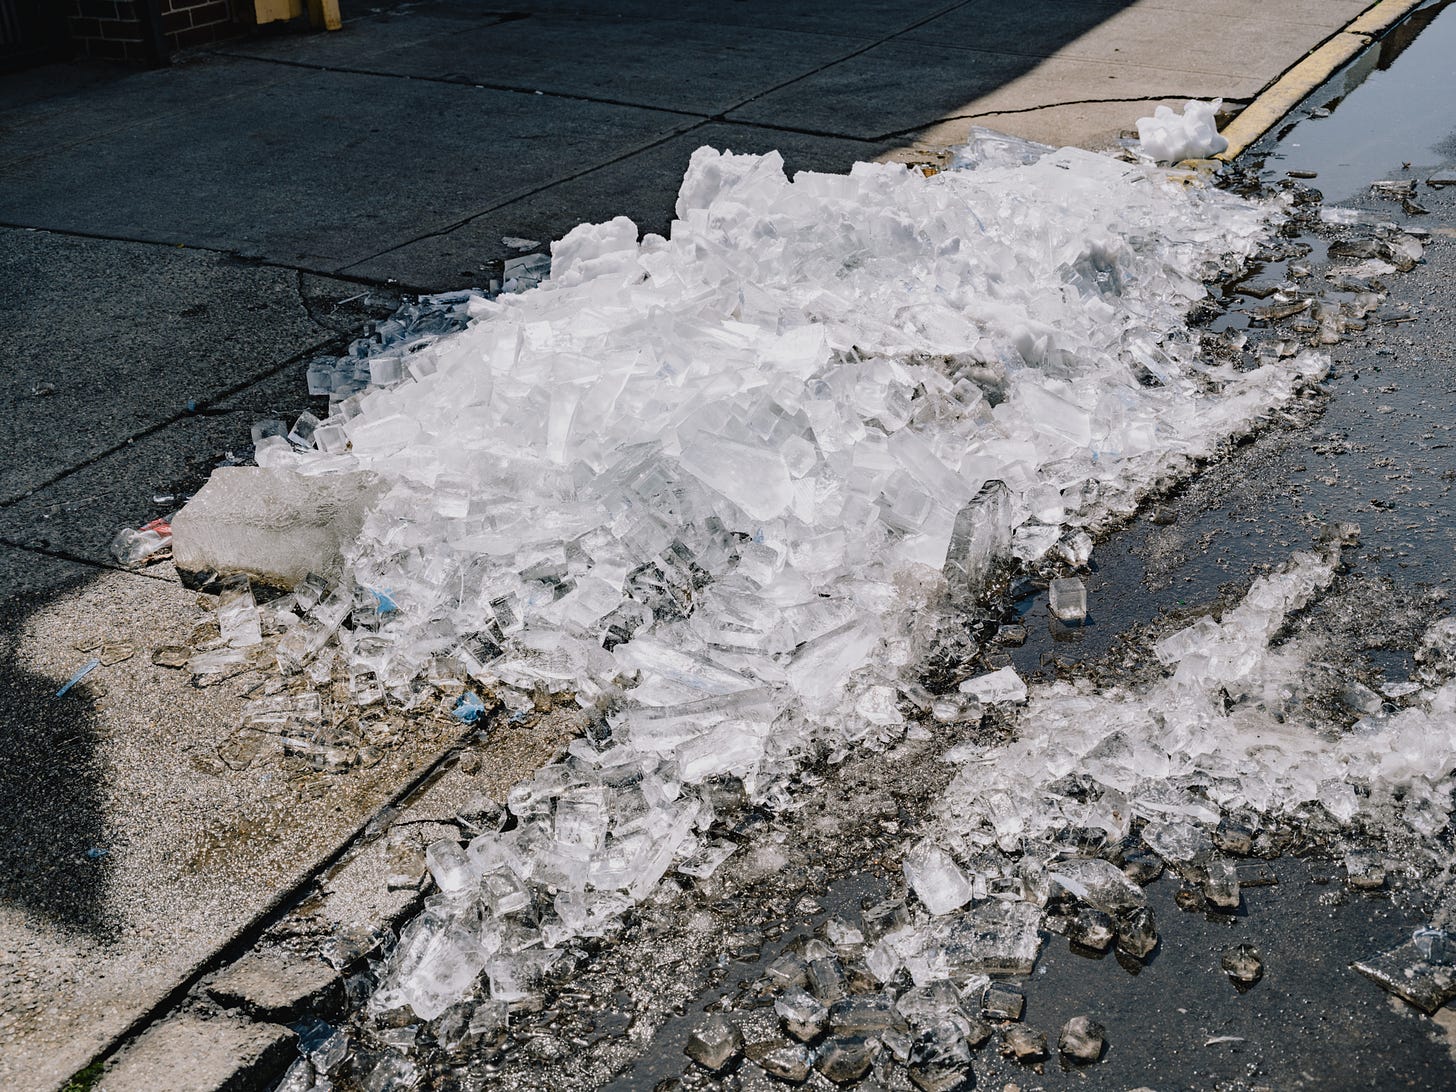 Pile of ice shards on the sidewalk